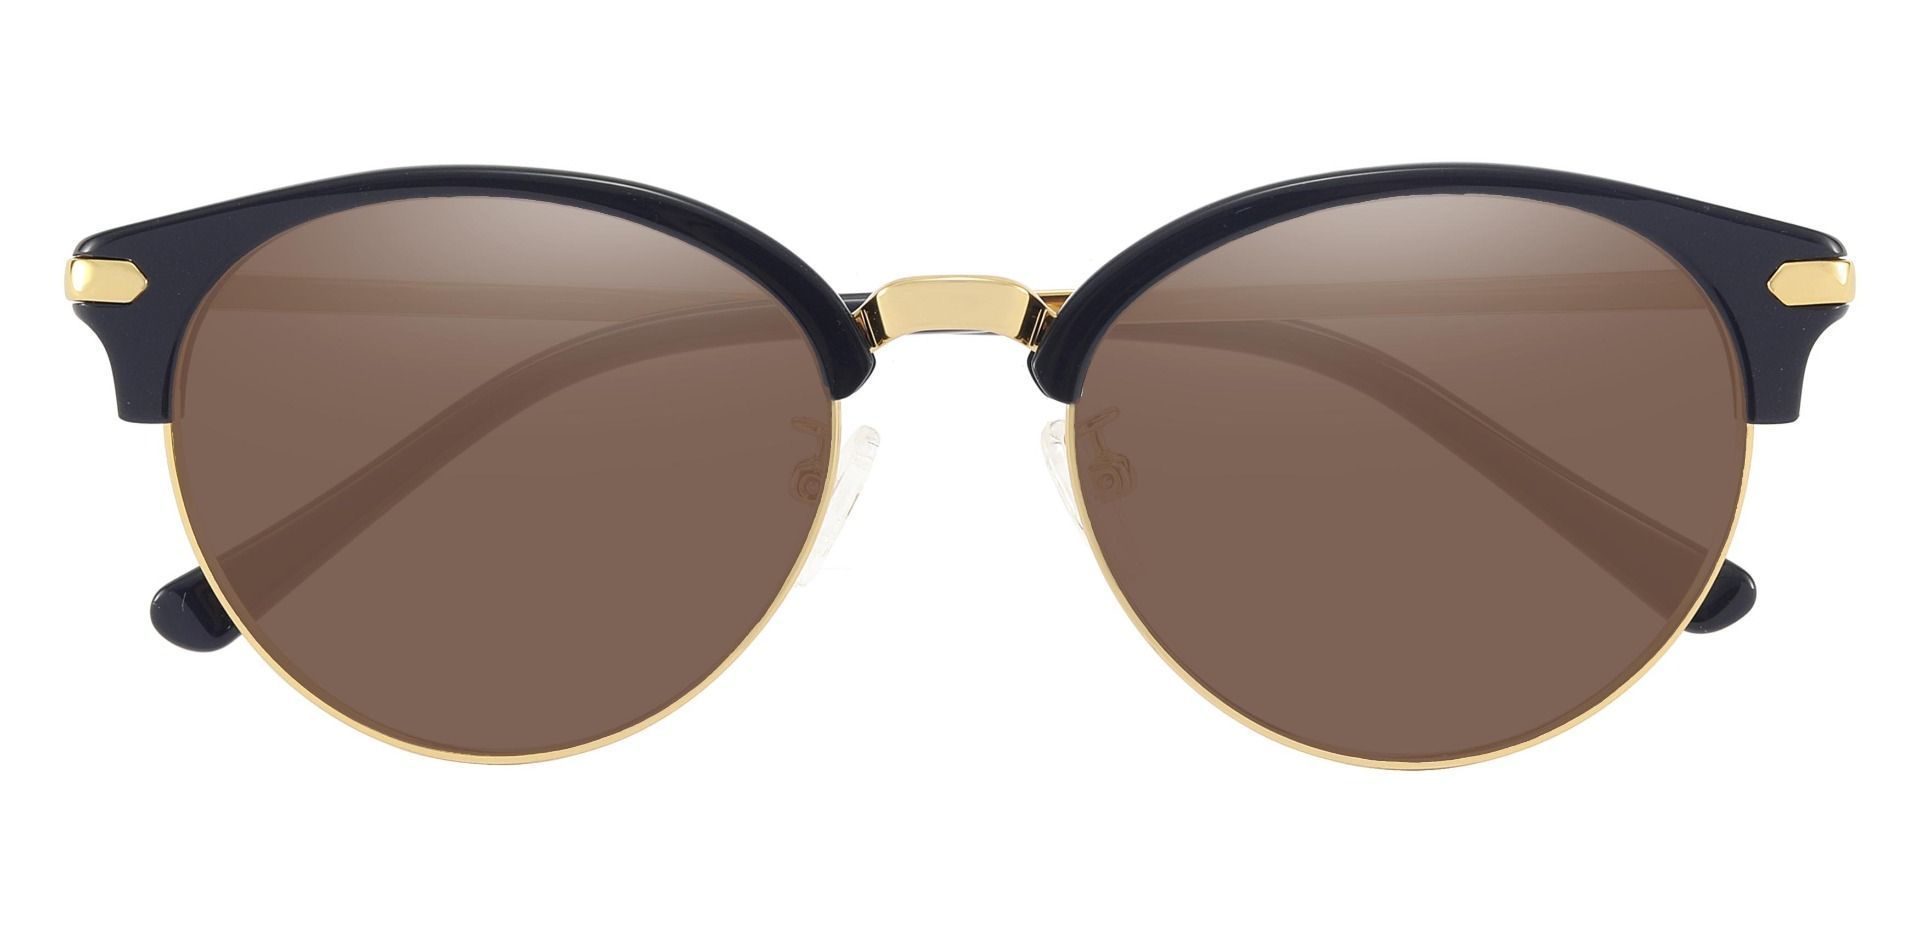 Catskill Browline Non-Rx Sunglasses - Blue Frame With Brown Lenses